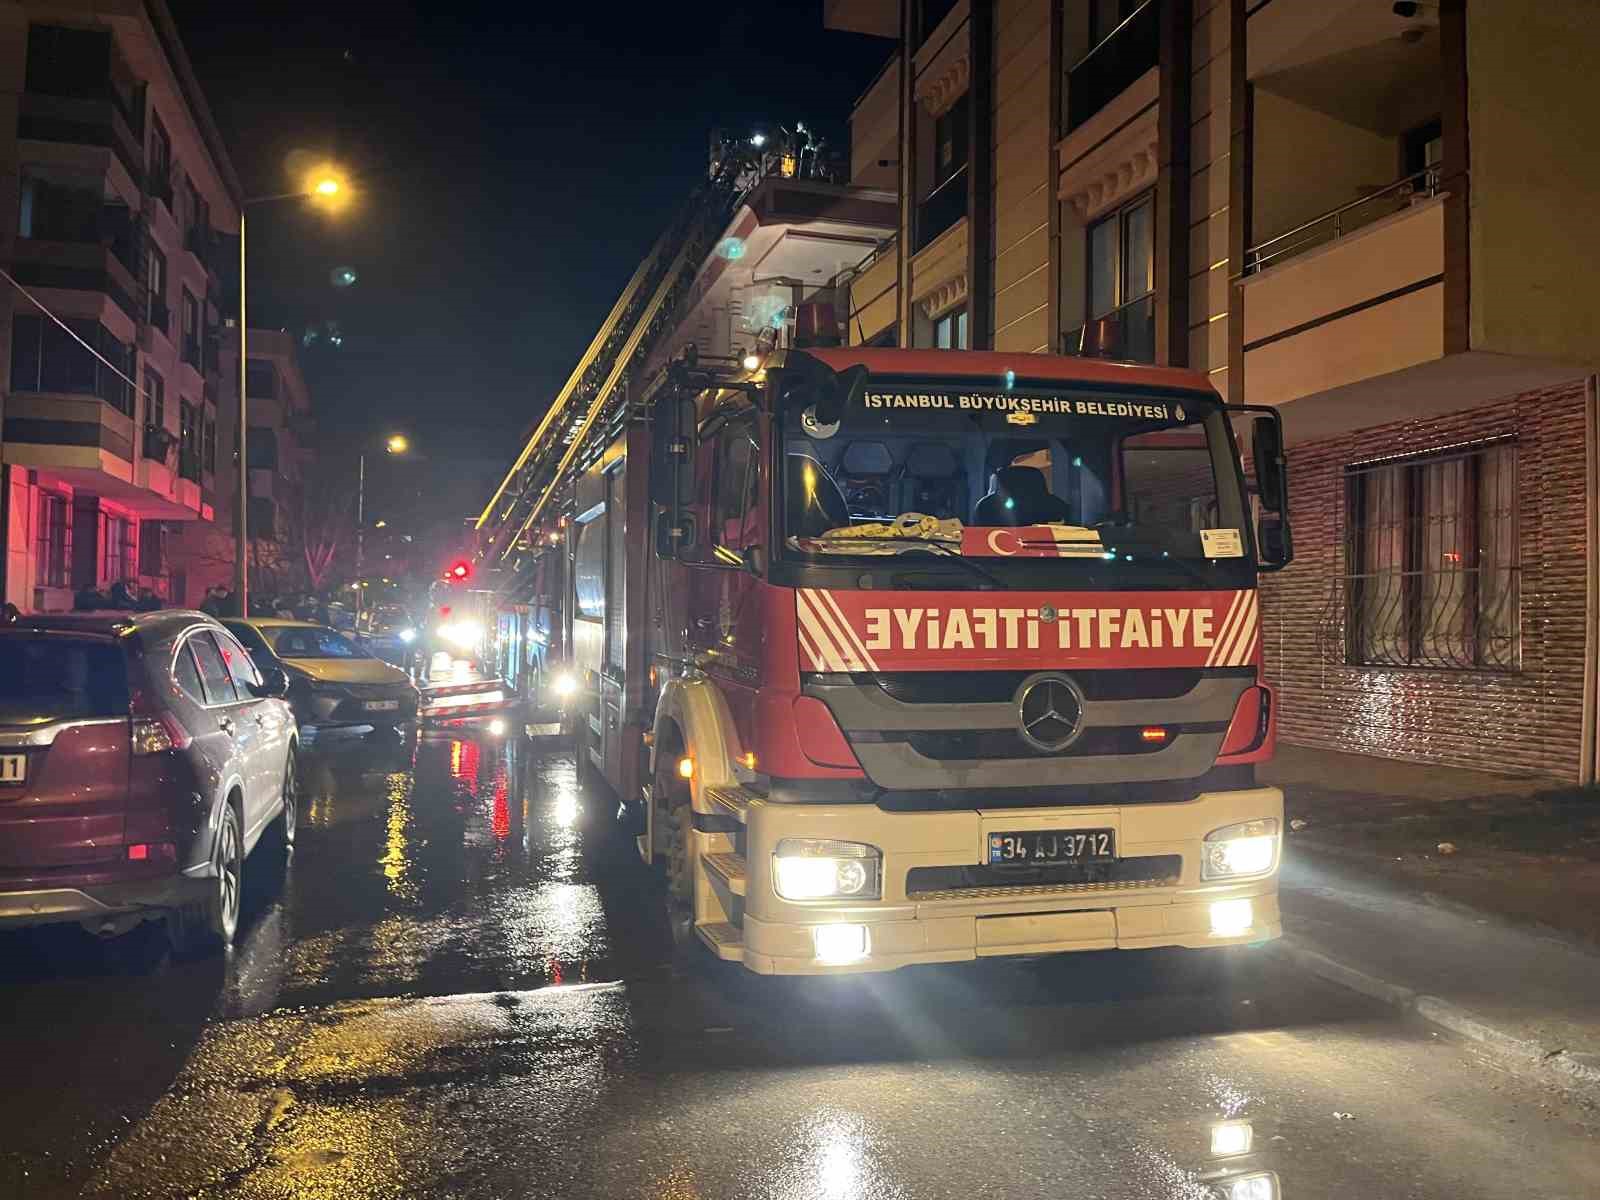 Başakşehir’de 3 katlı binanın çatısı alev alev yandı
